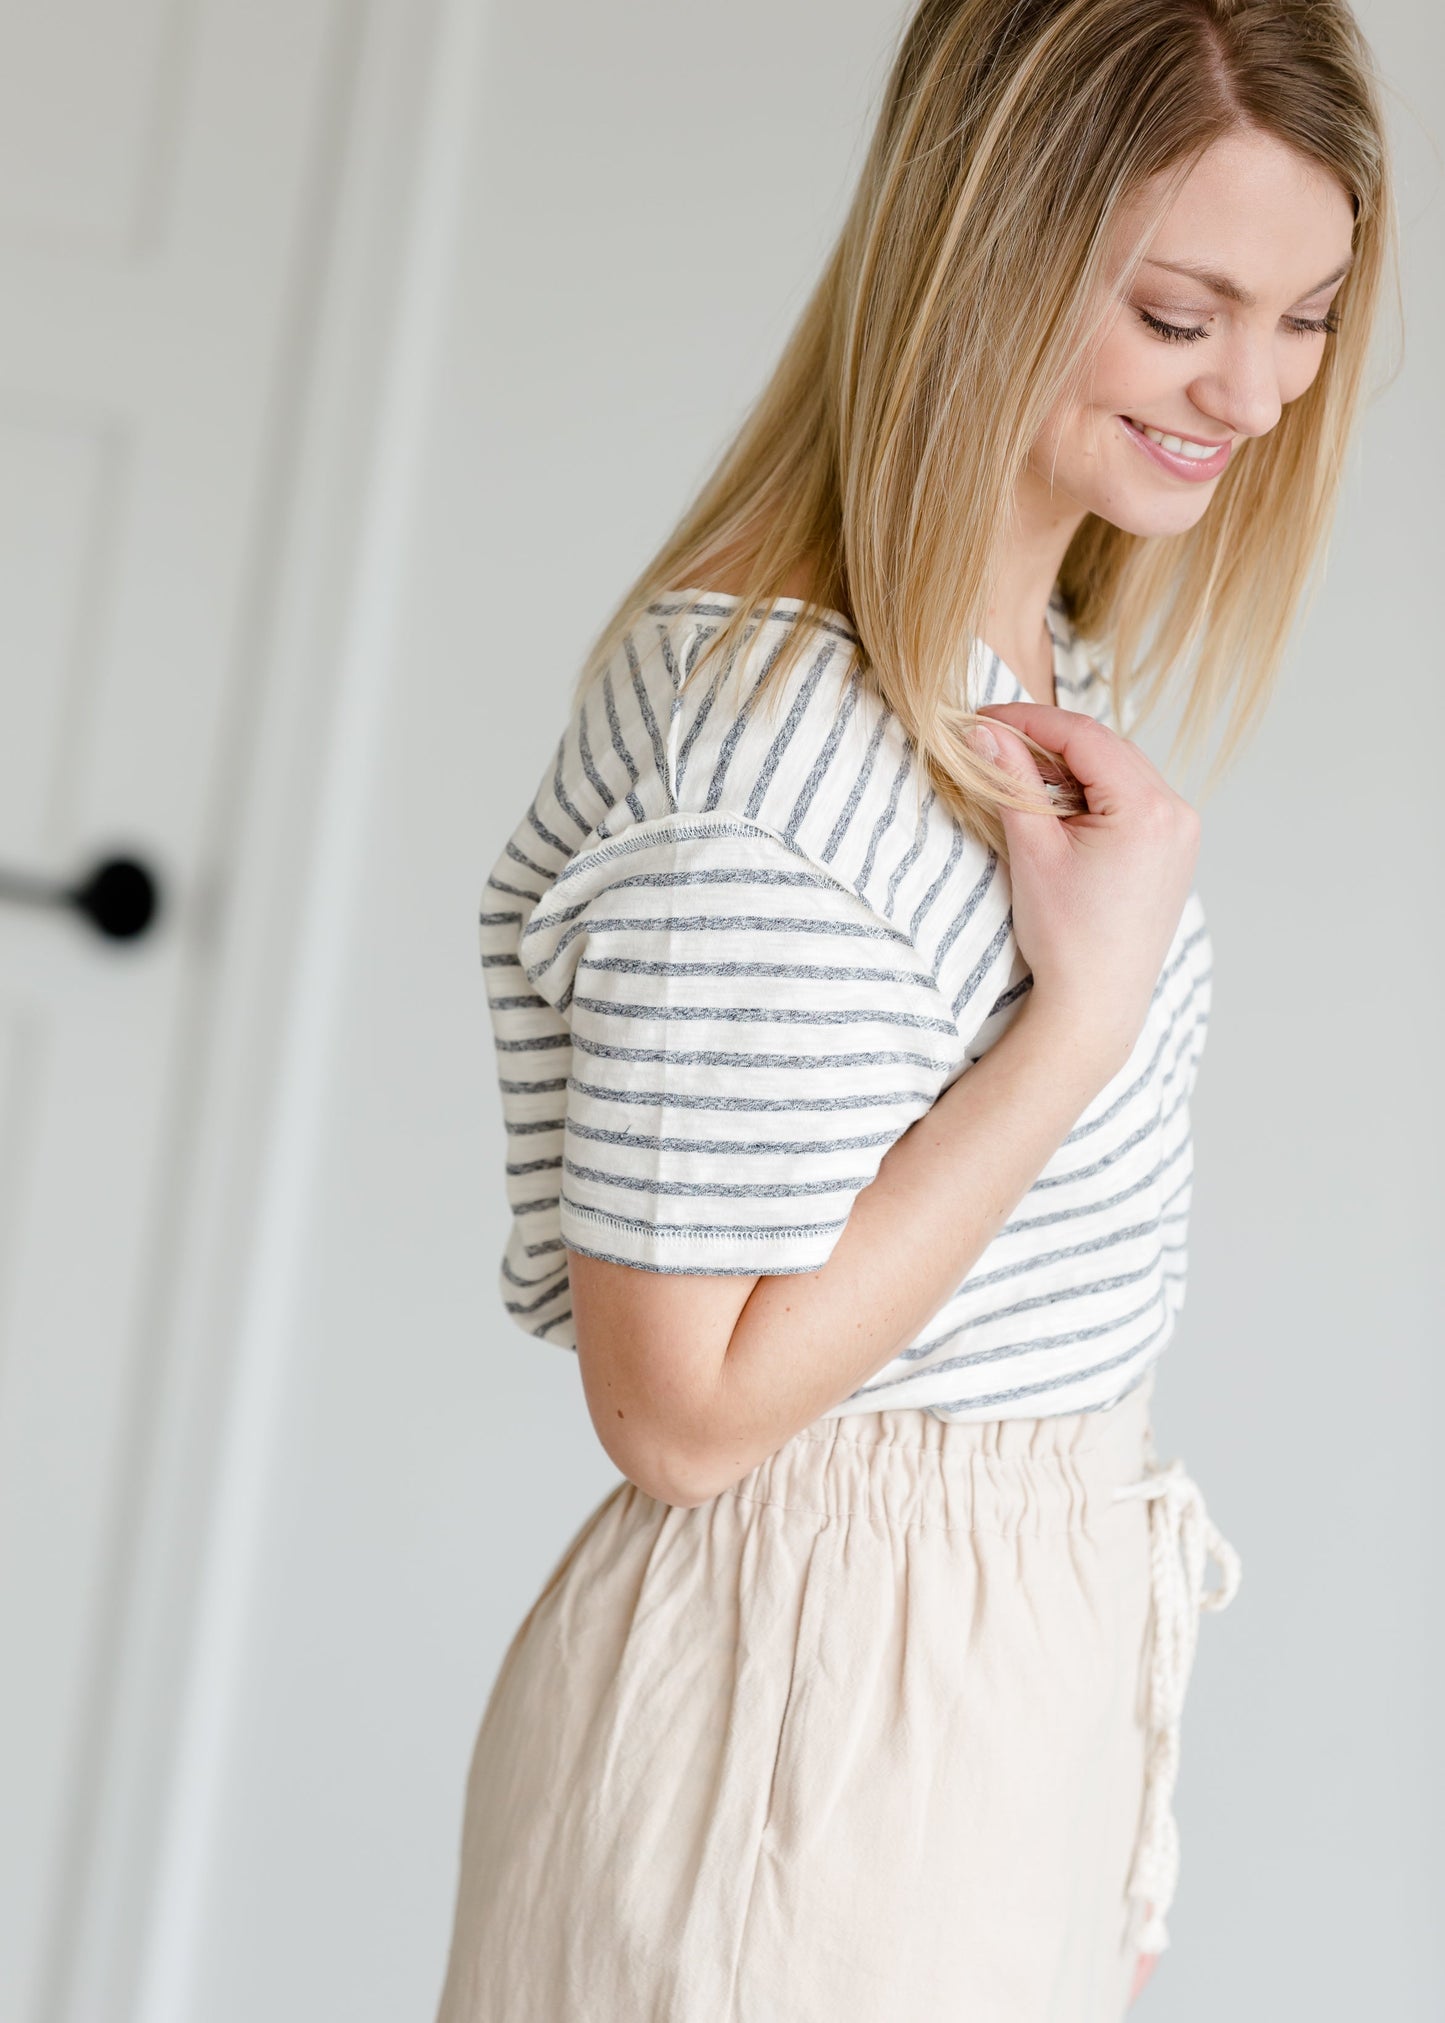 Knit Striped Short Sleeve Top - FINAL SALE Tops